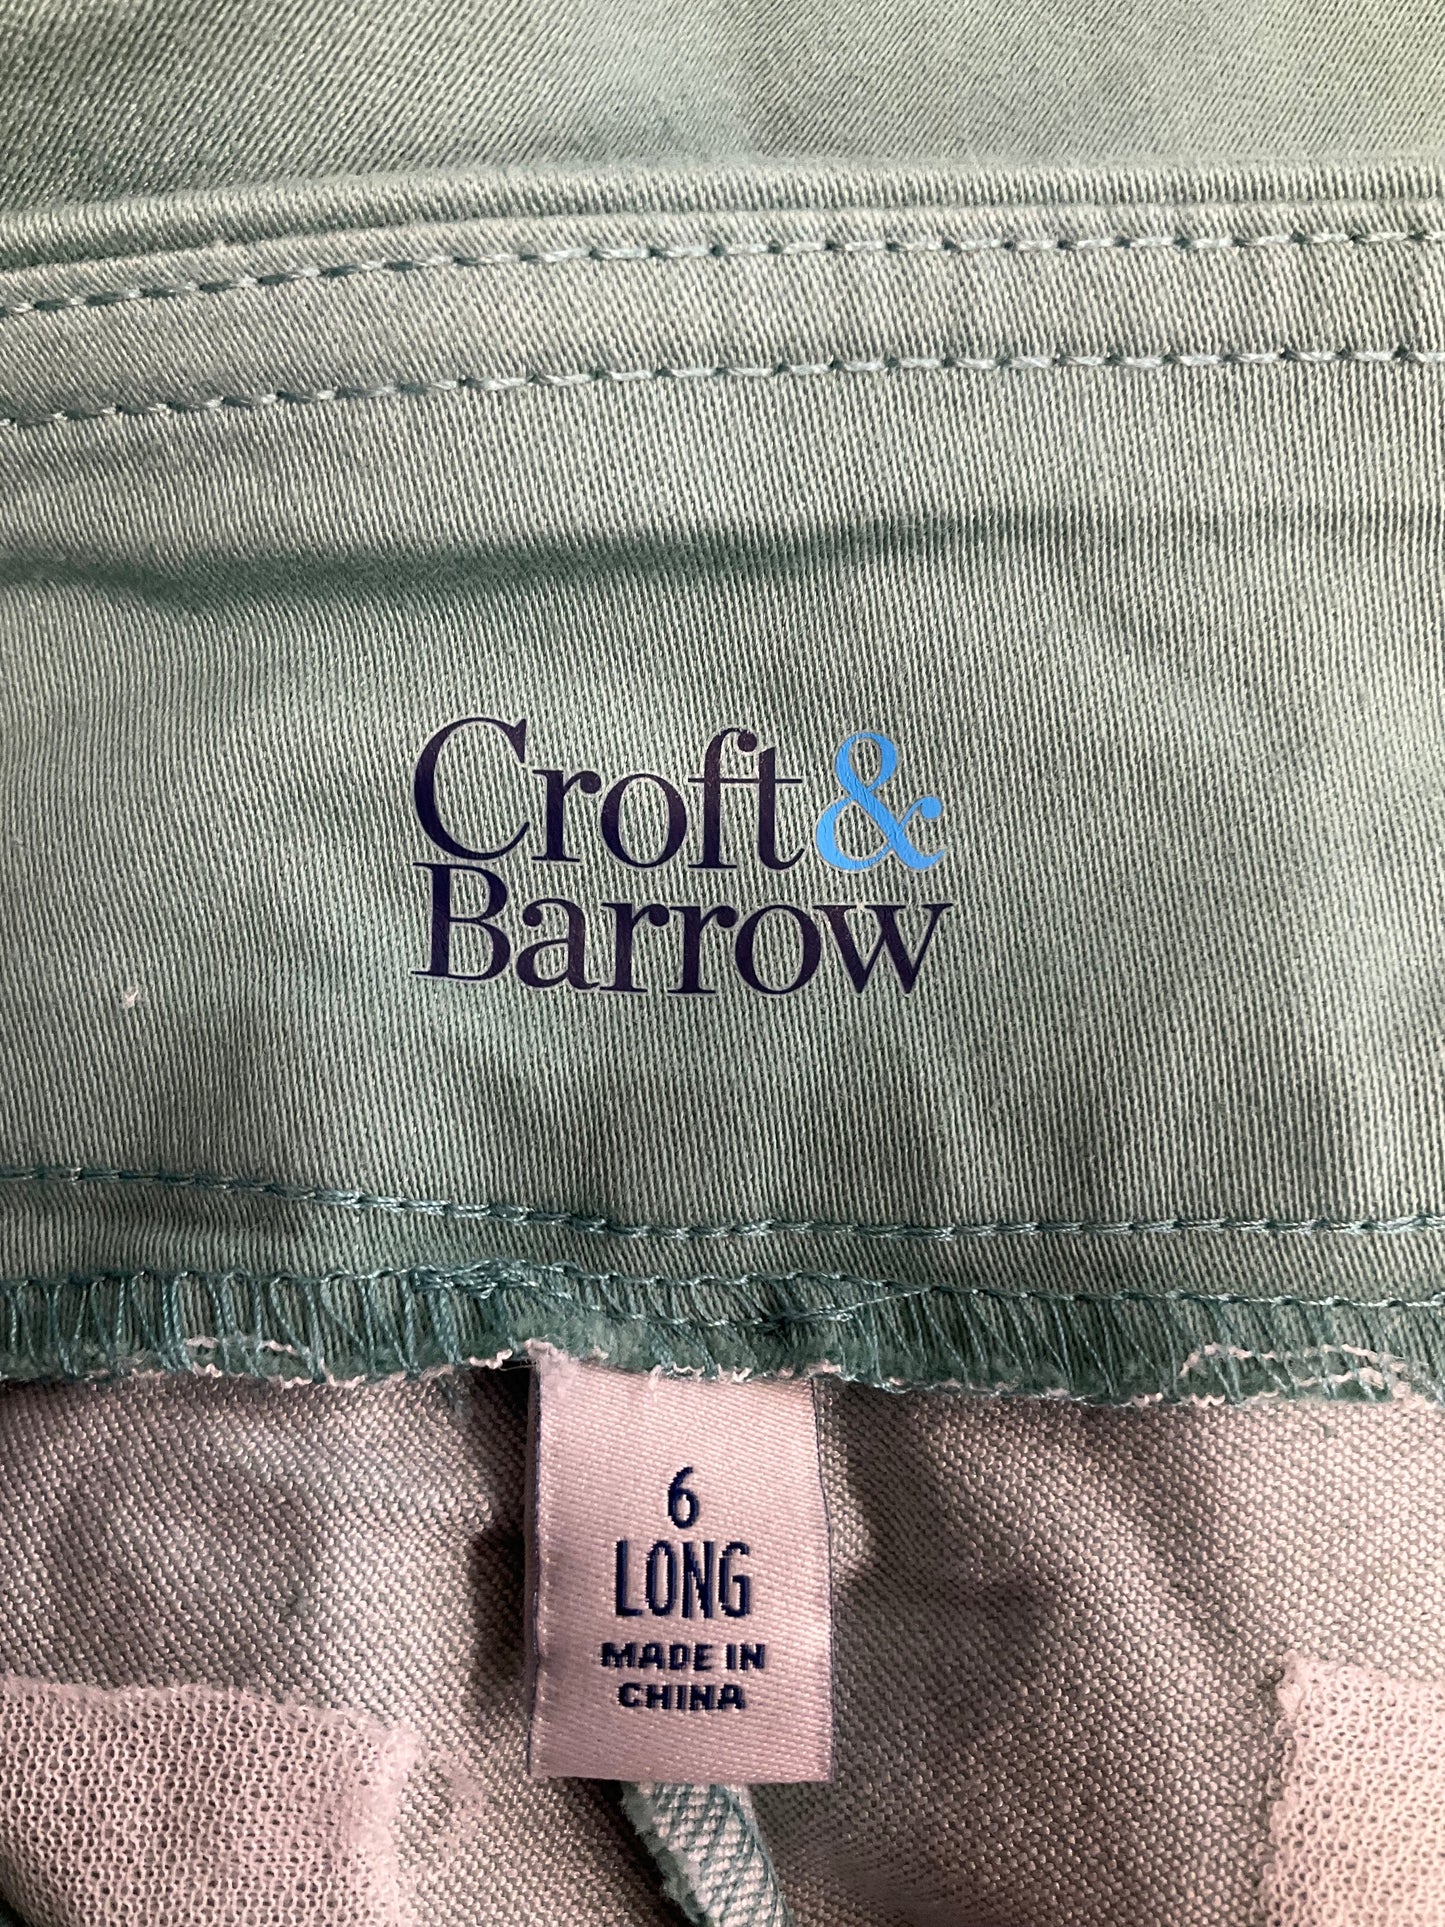 Green Pants Dress Croft And Barrow, Size 6long